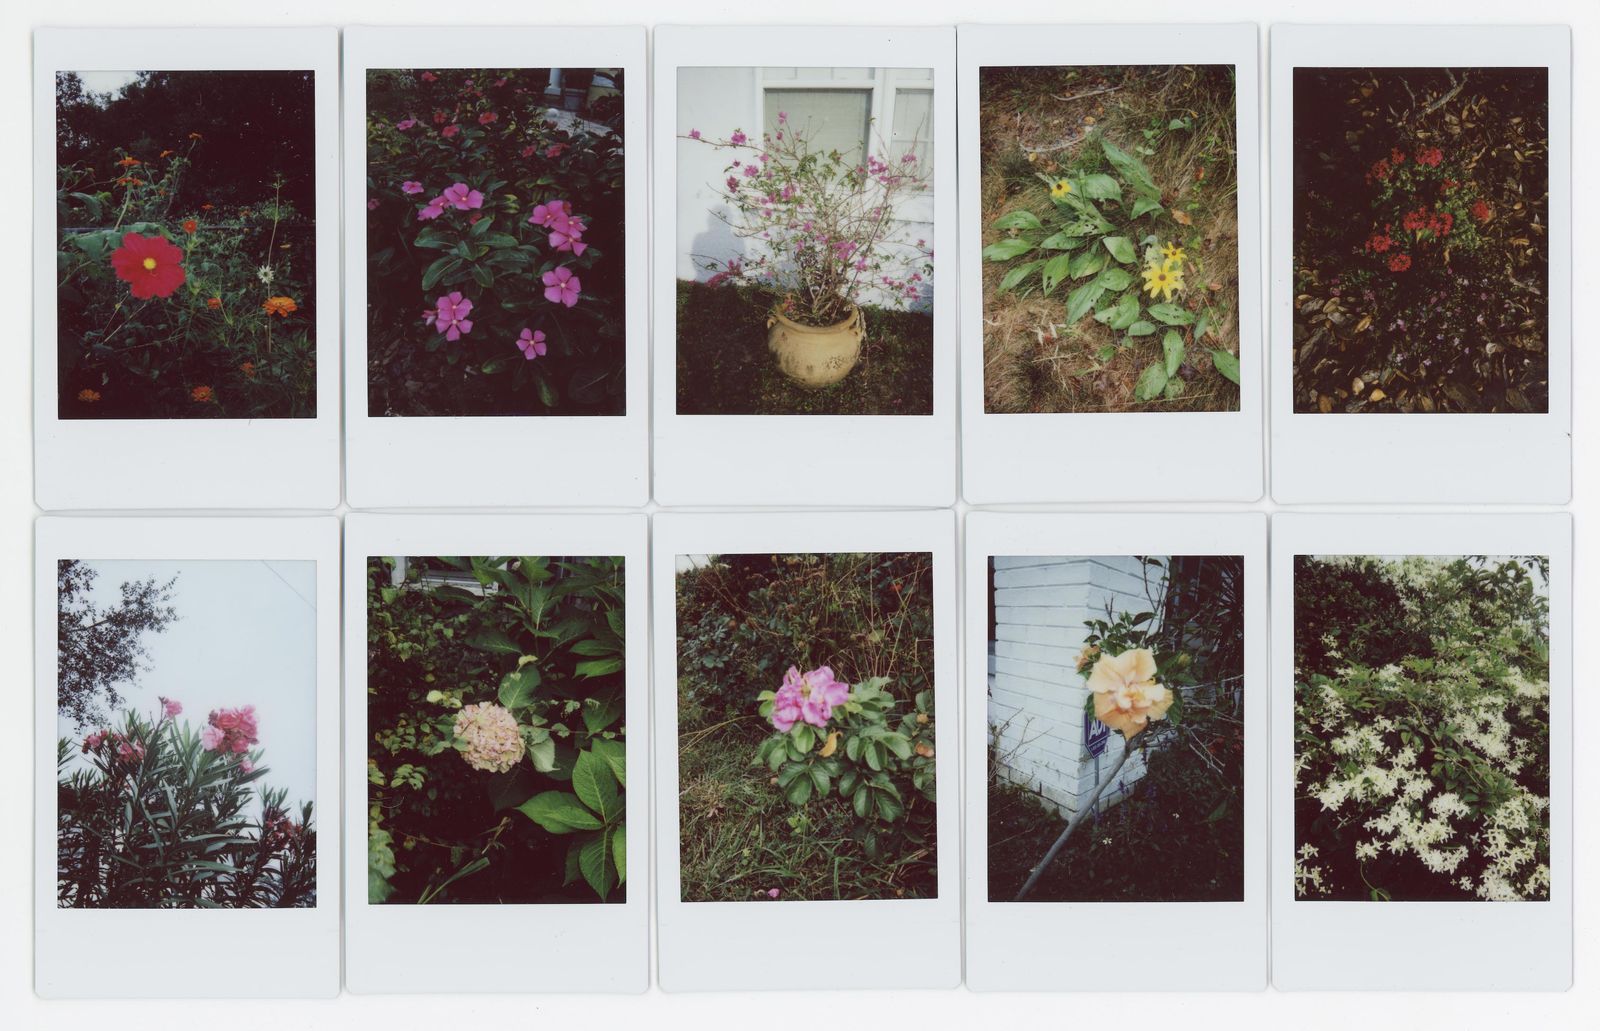 © RACHEL TREIDE - "A Minute Fraction of All the Flowers I've Ever Seen," photographs 81-90